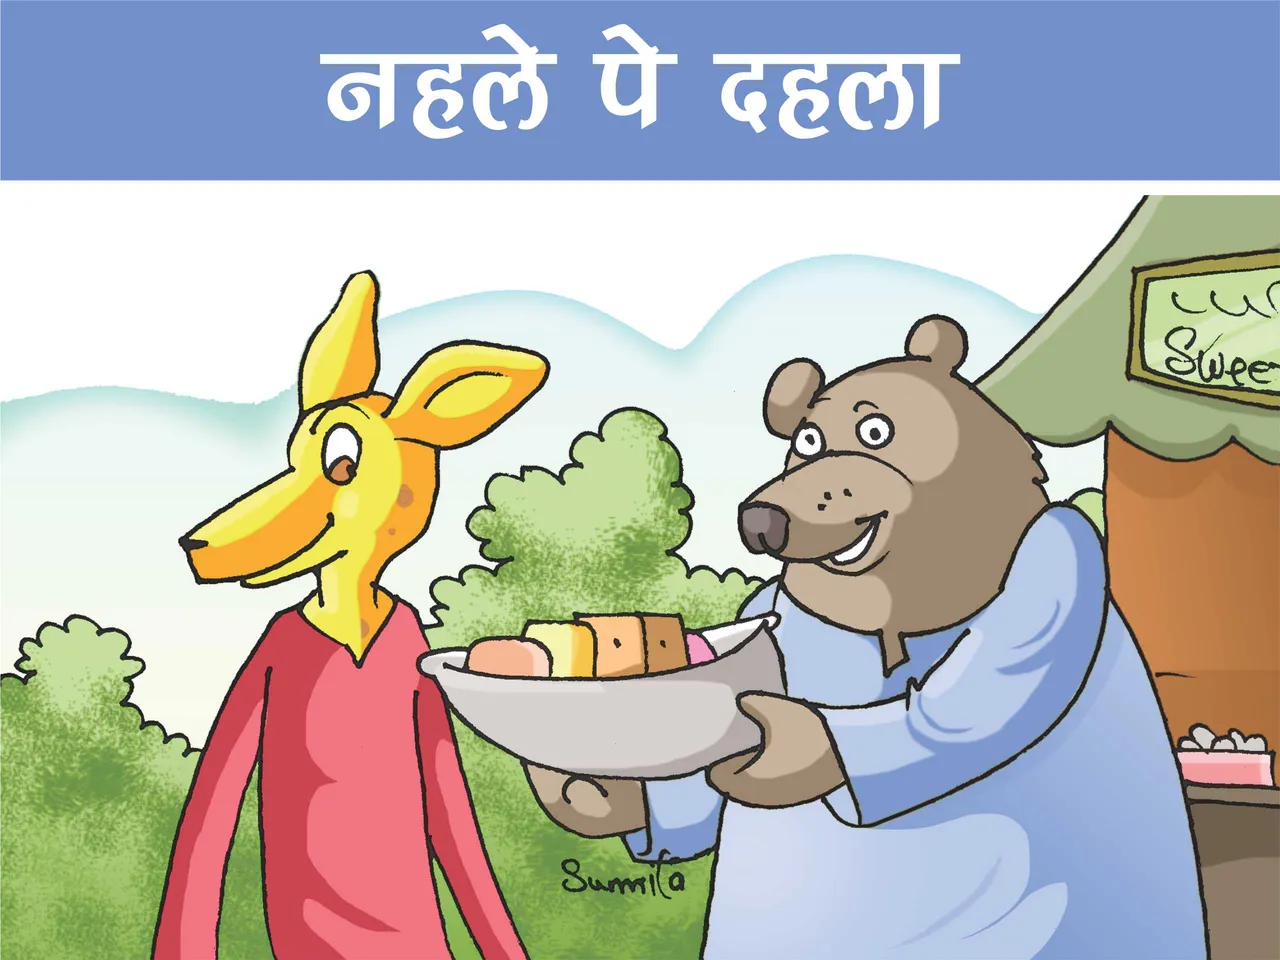 Bear and Dear talking Cartoon Image